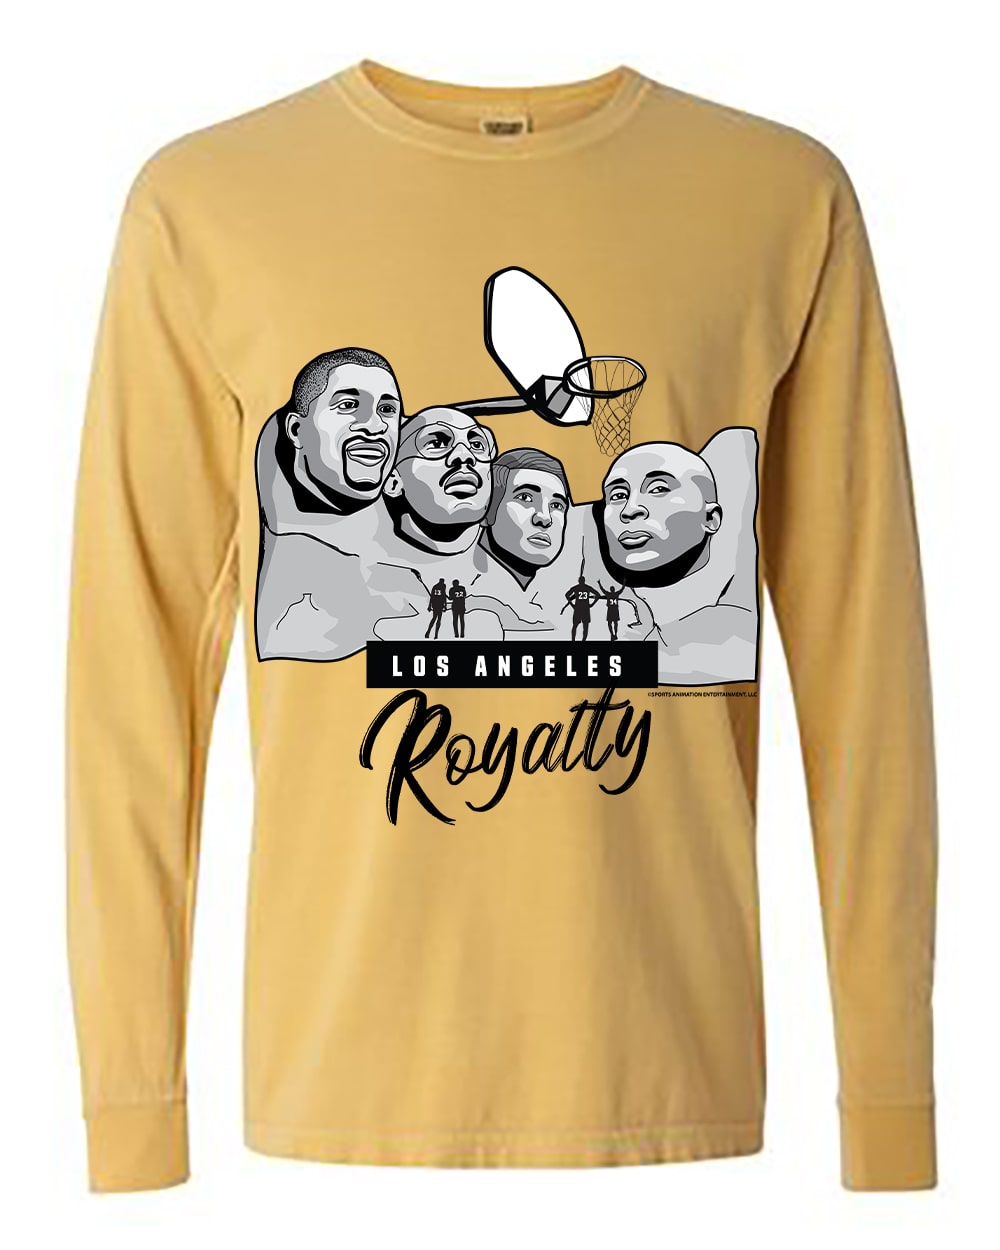 Basketball Los Angeles Royalty (Gold Long Sleeve Shirt) Mount Rushmore